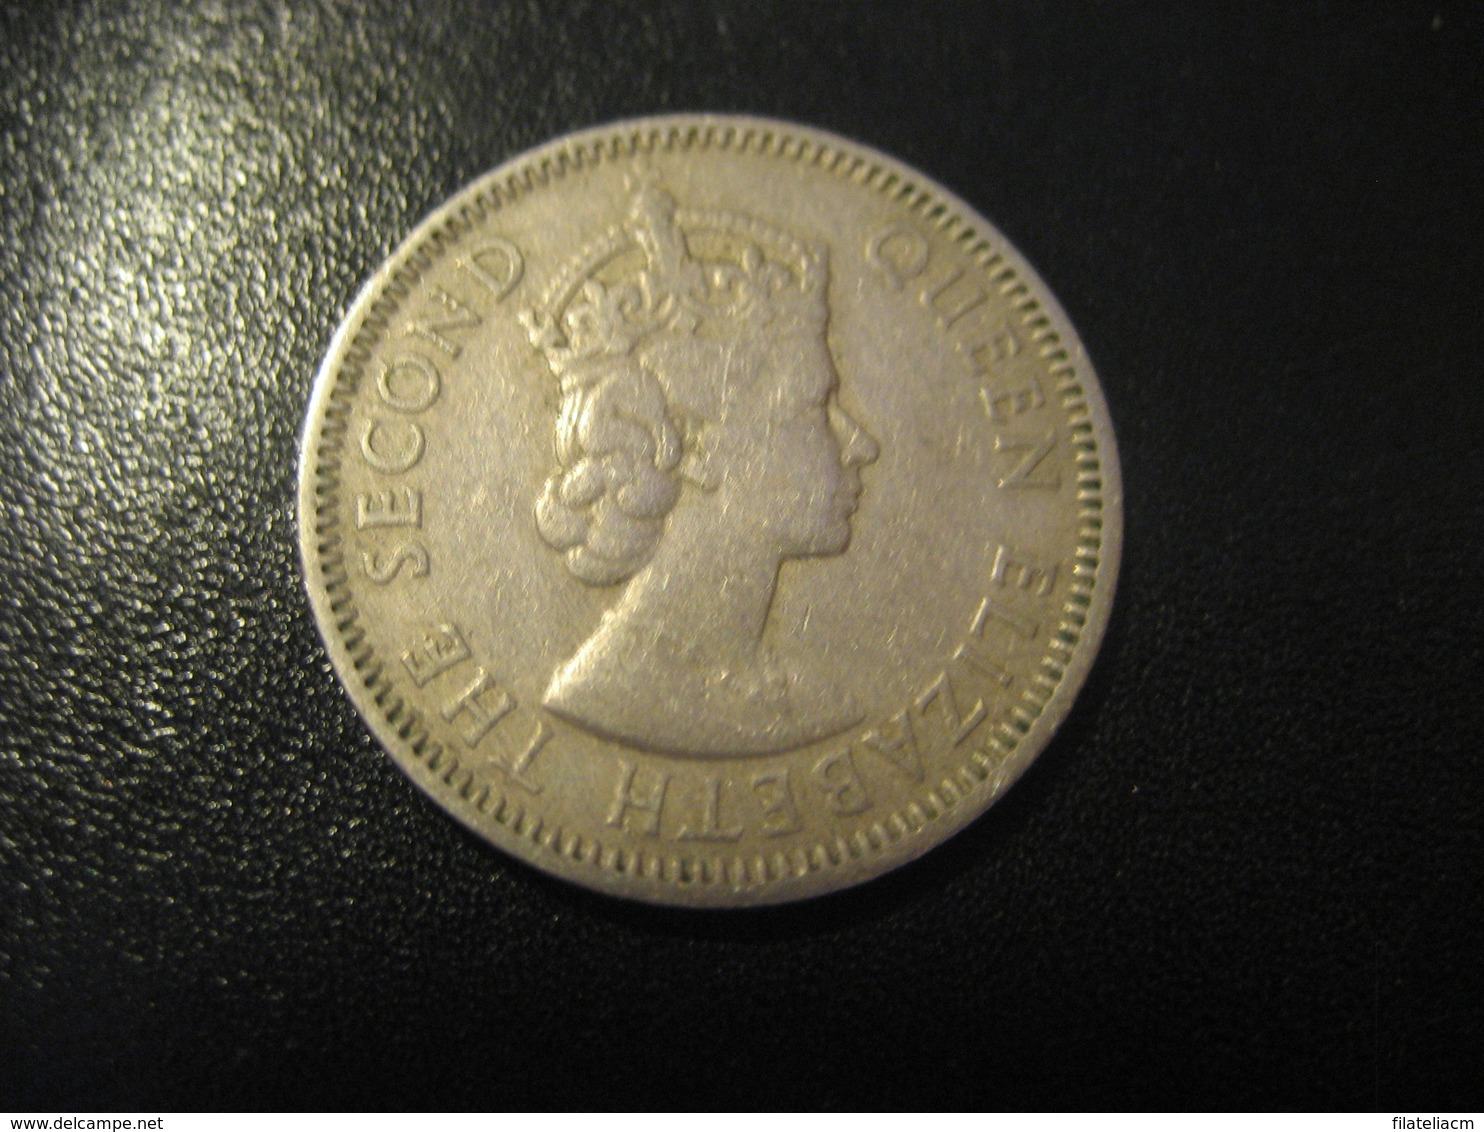 25 Cents BRITISH CARIBBEAN TERRITORIES 1955 Coin British West Indies Antillas - Antilles